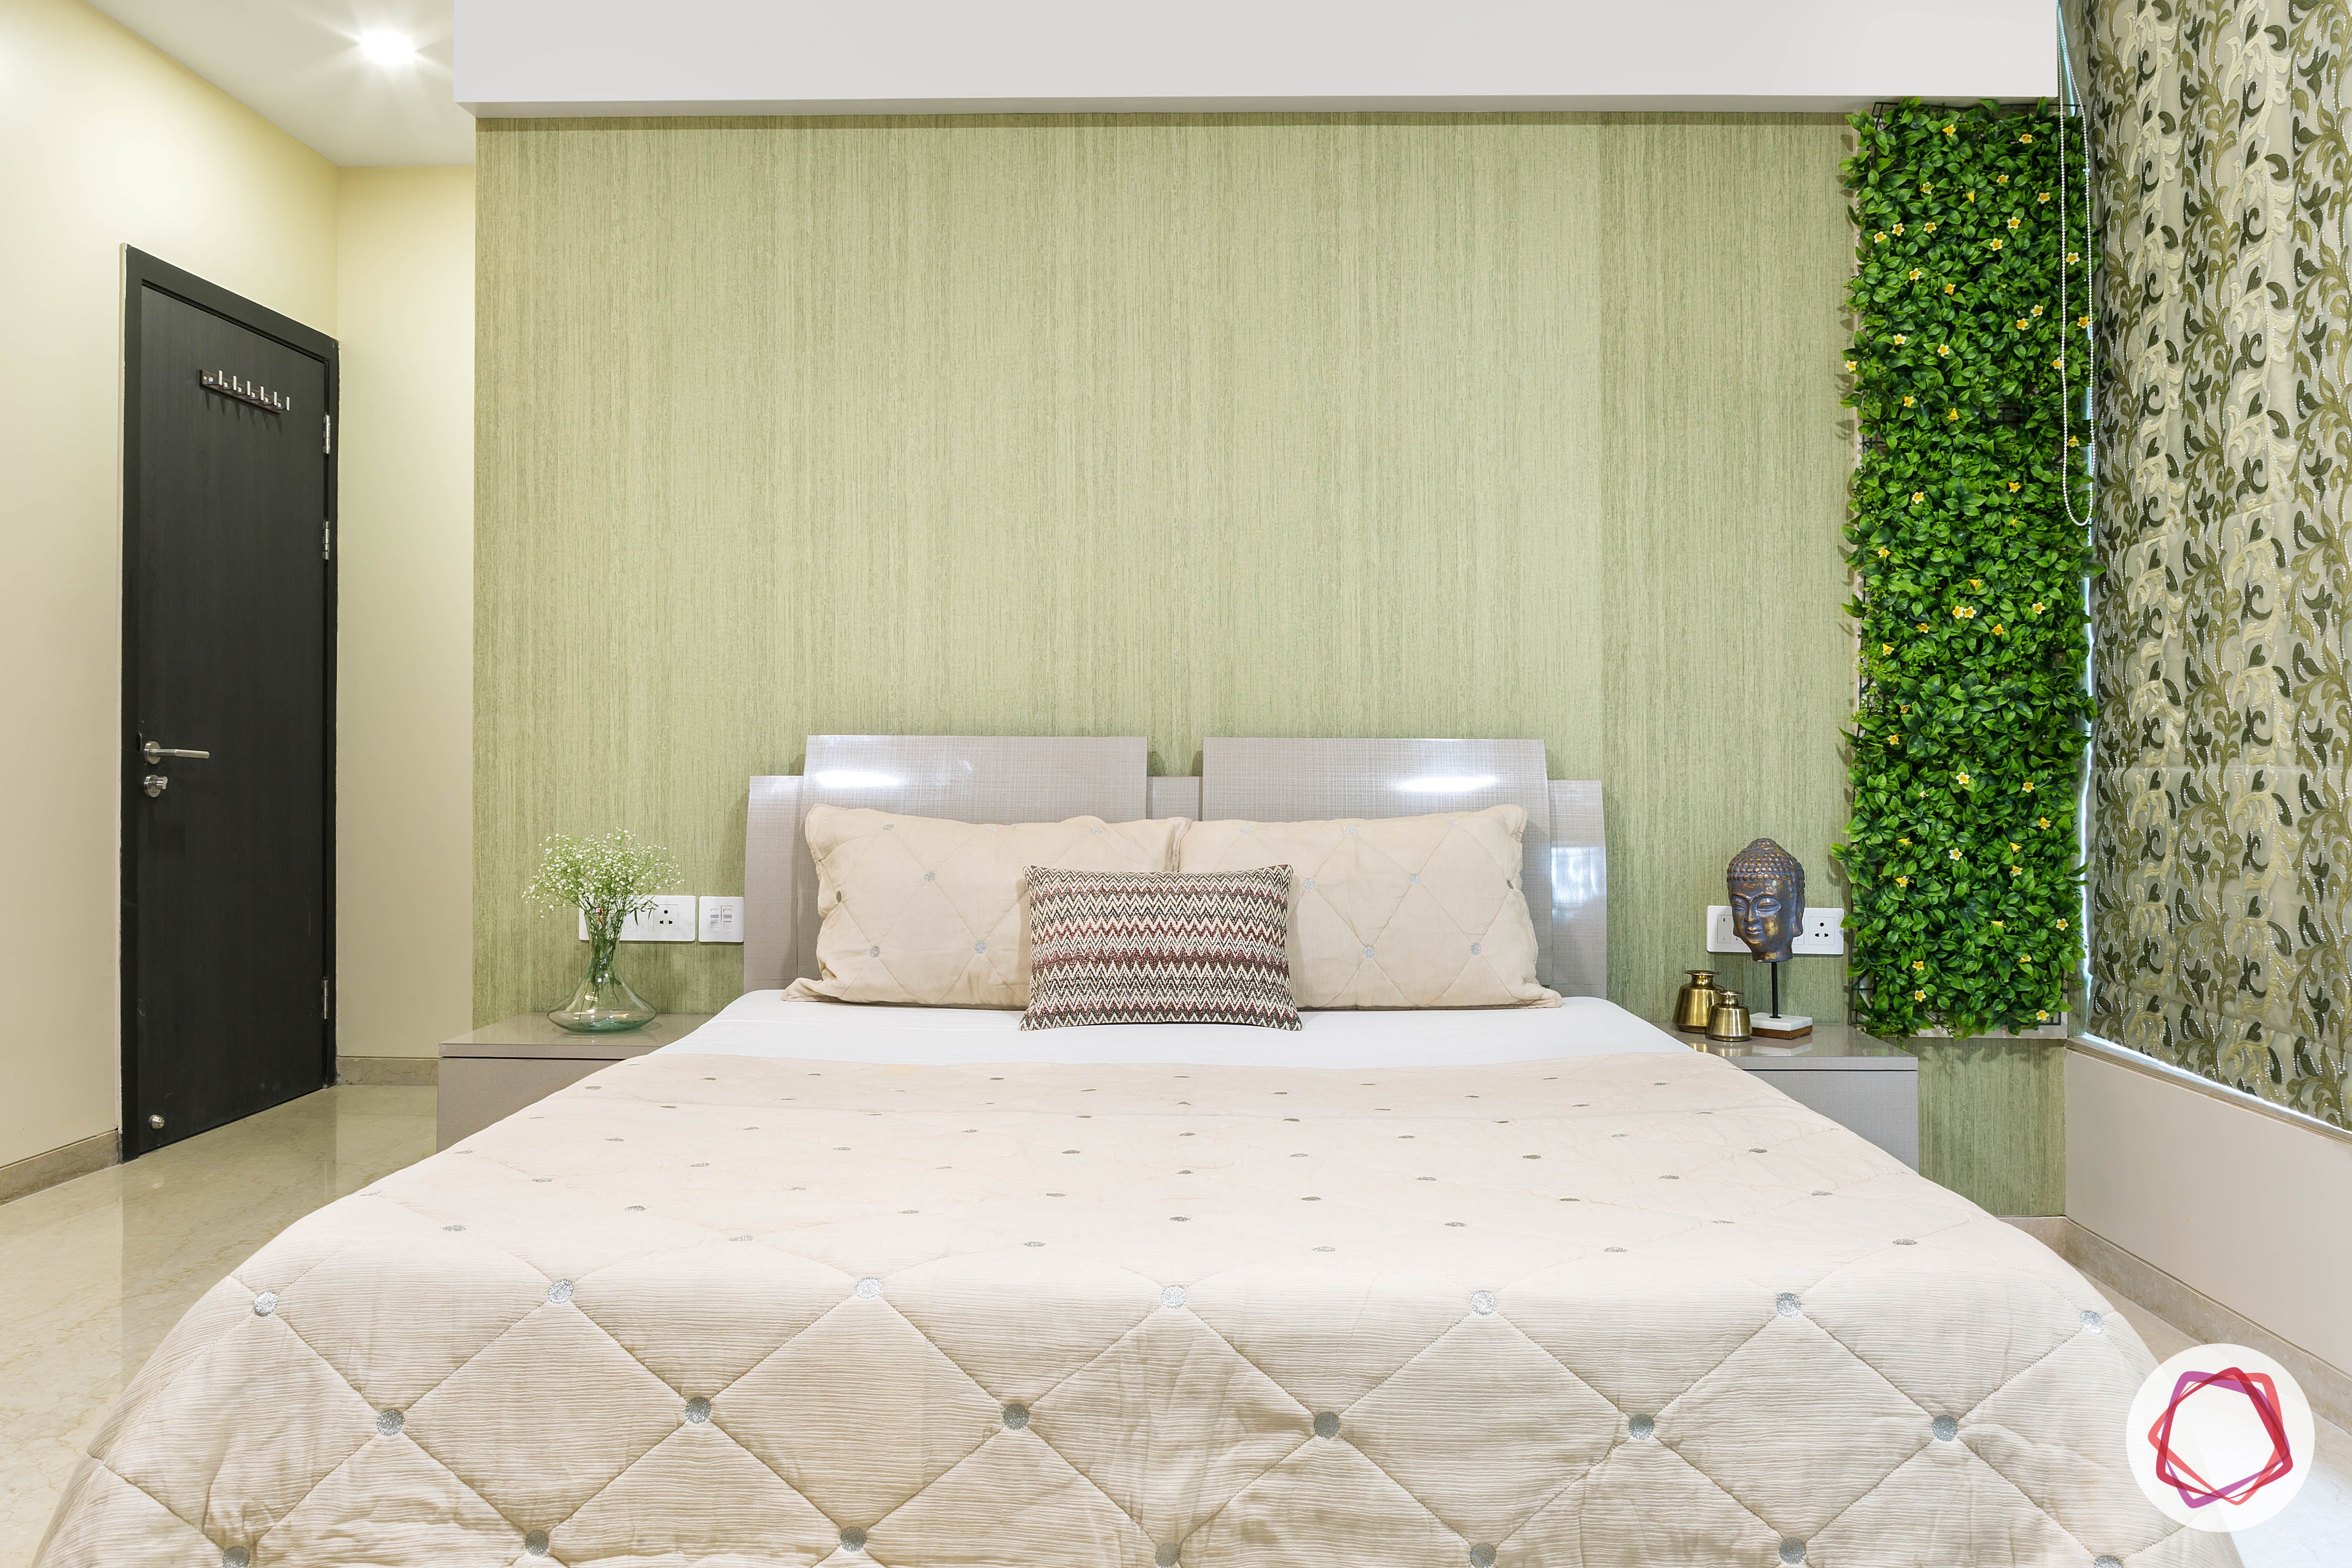 Oberoi esquire_master bedroom bed and vertical garden